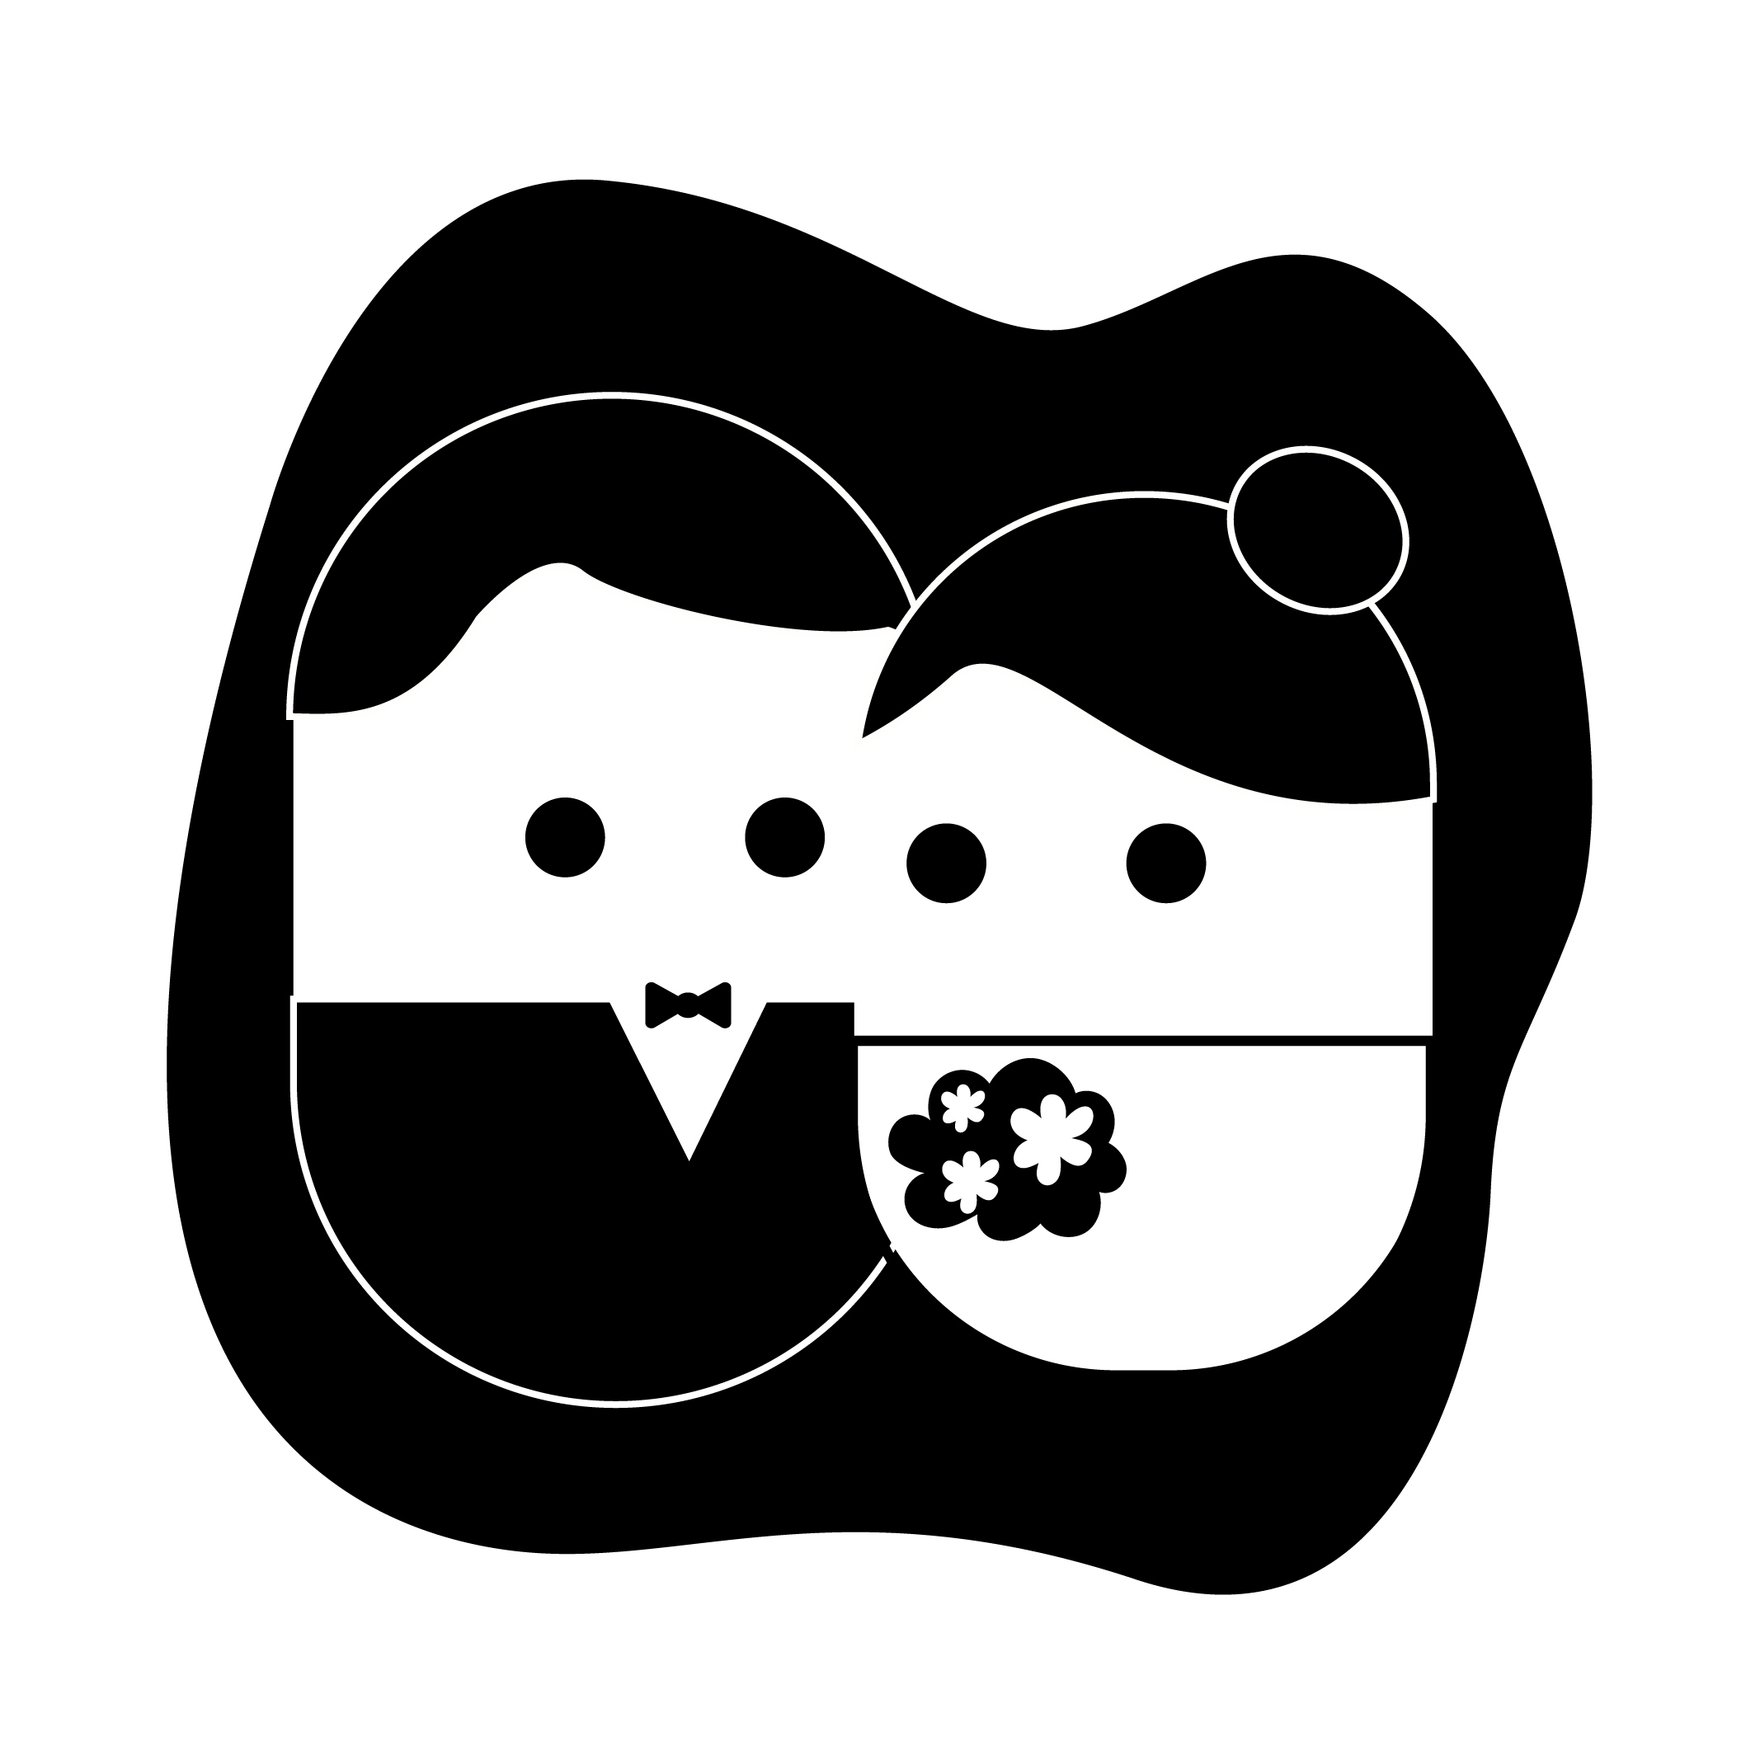 Free Love Couple Heart Silhouette - EPS, Illustrator, JPG, PSD, PNG, SVG |  